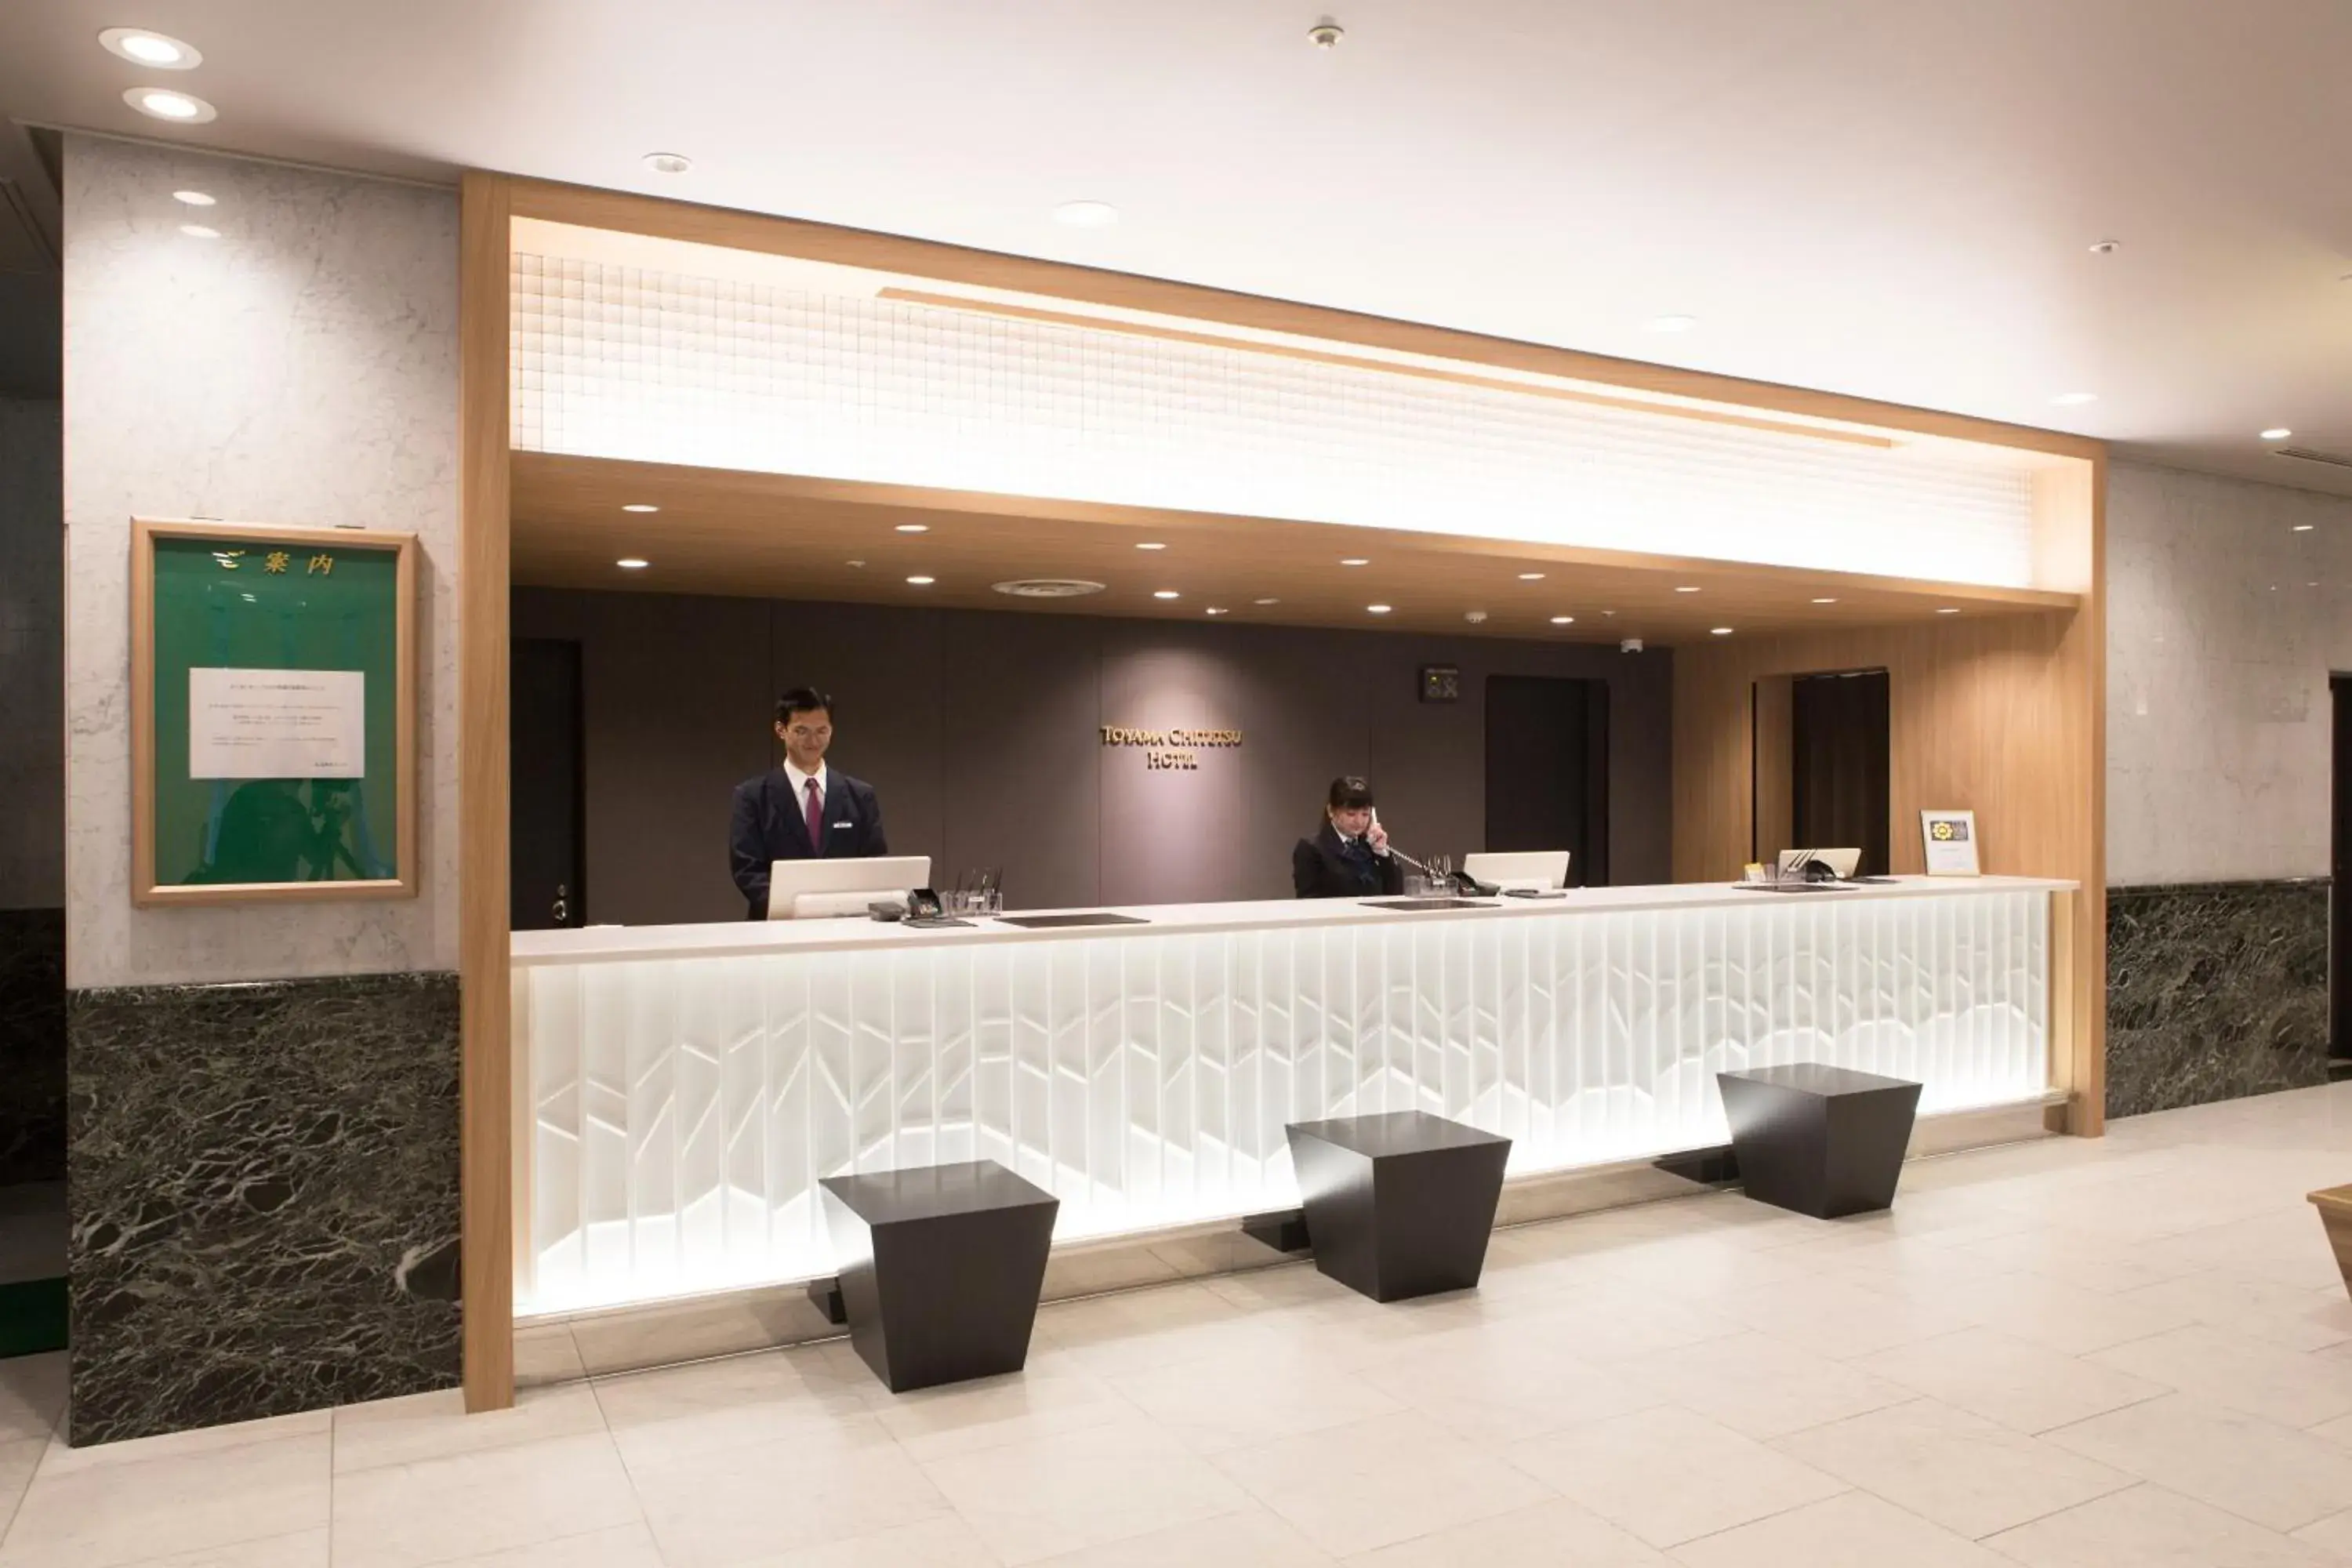 Lobby or reception, Lobby/Reception in Toyama Chitetsu Hotel